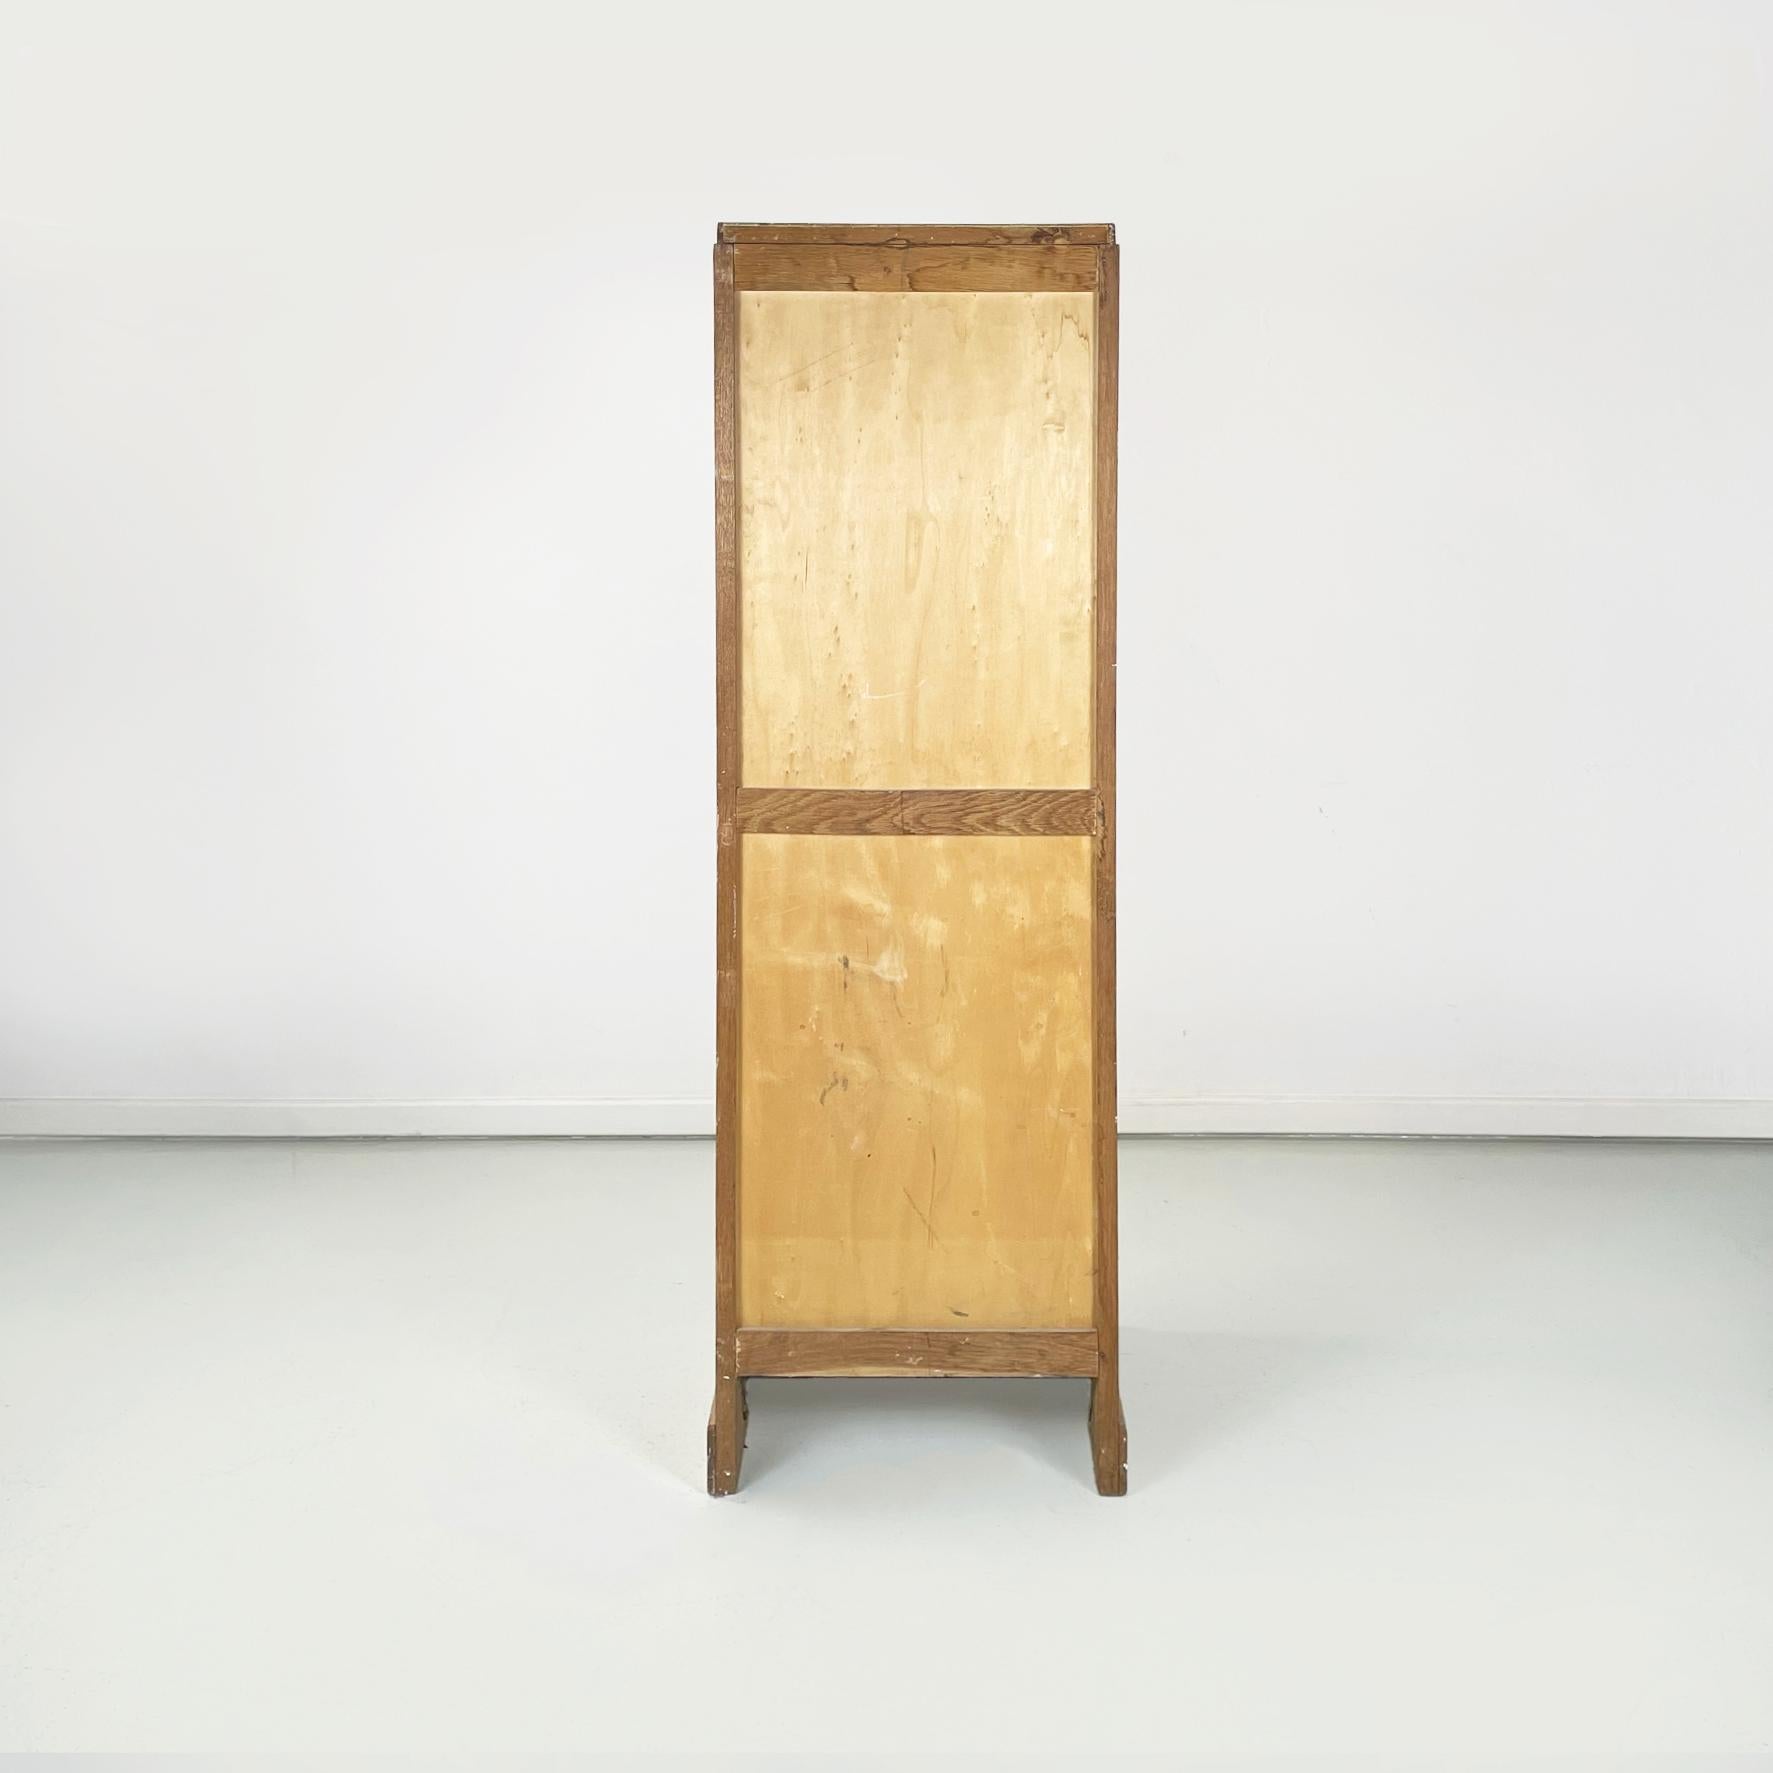 Metal Italian Mid-Century Modern Wooden Office Filing Cabine Archive Dresser, 1940s For Sale